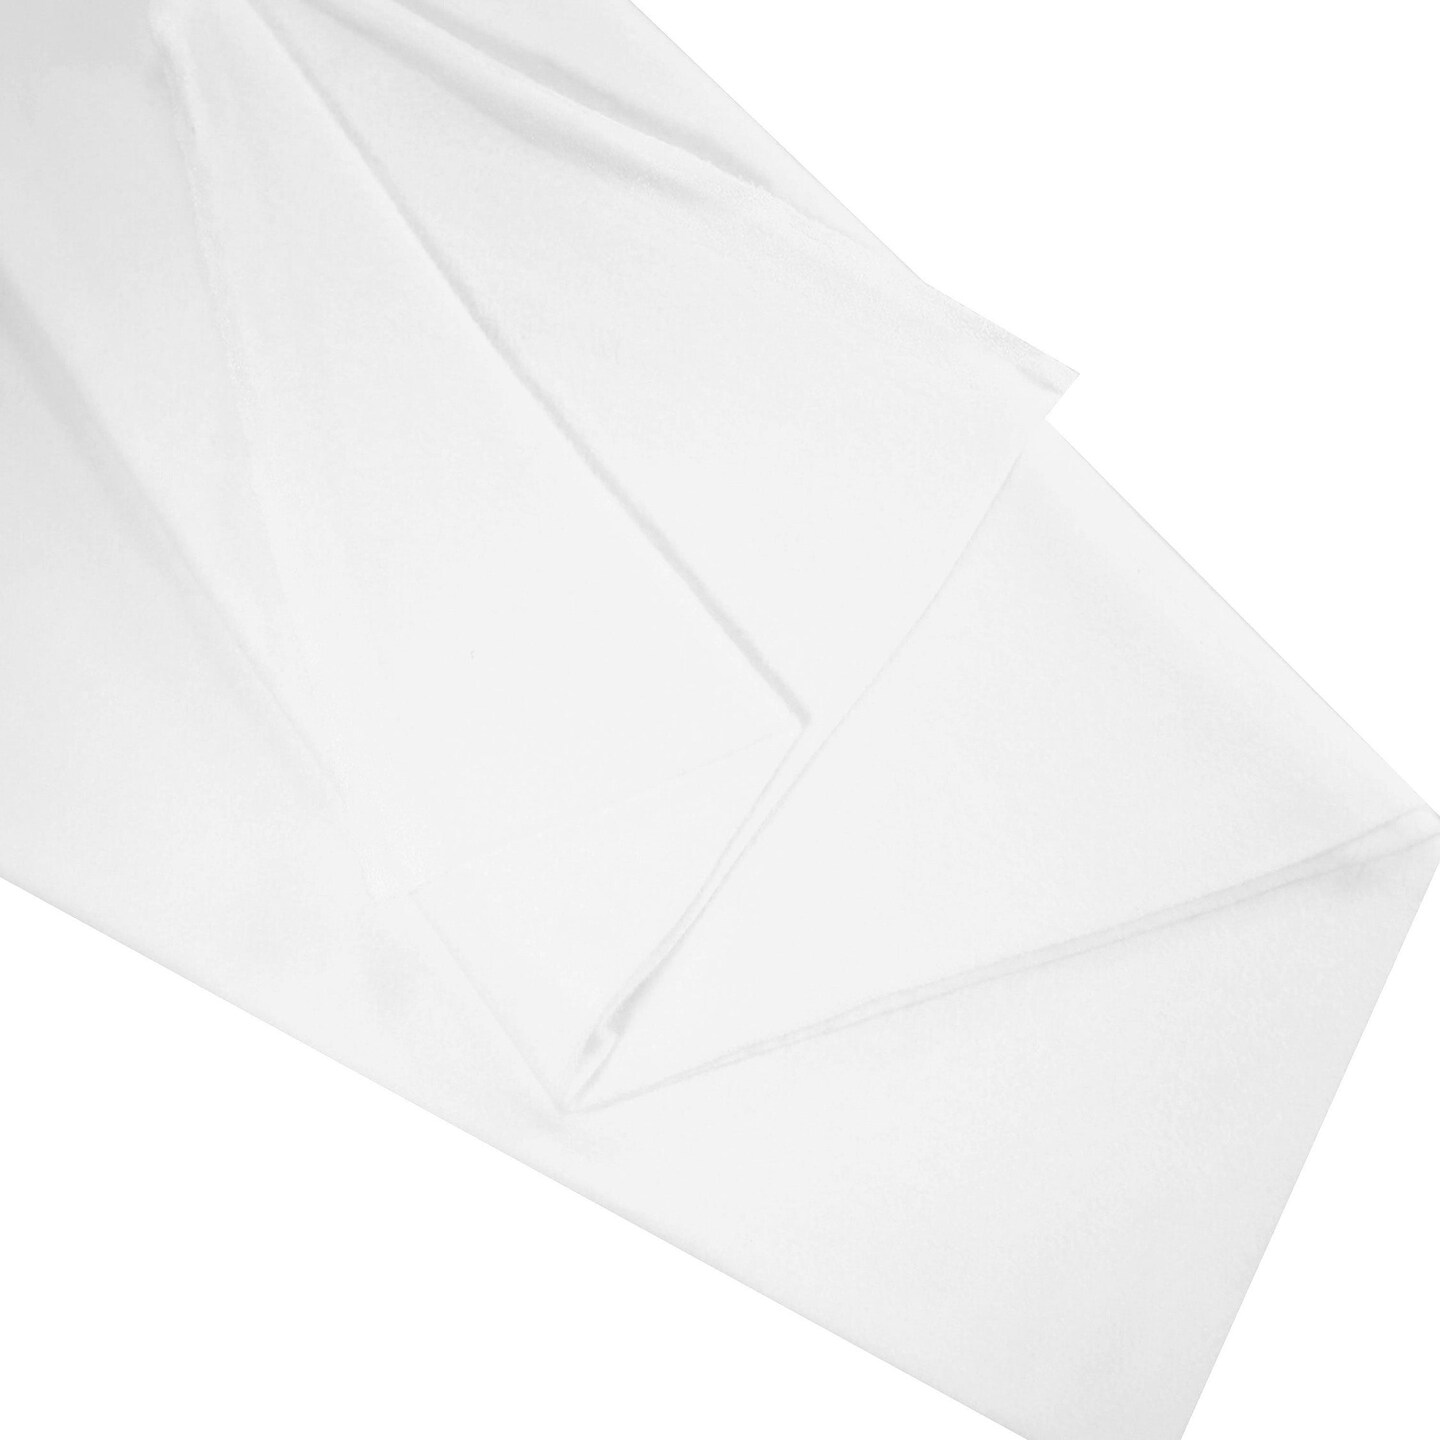 FabricLA | Fleece Fabric By The Yard | 36&#x22;X60&#x22; Inch Wide | Anti Pill Polar Fleece | Soft, Blanket, Throw, Poncho, White (1 Yard)